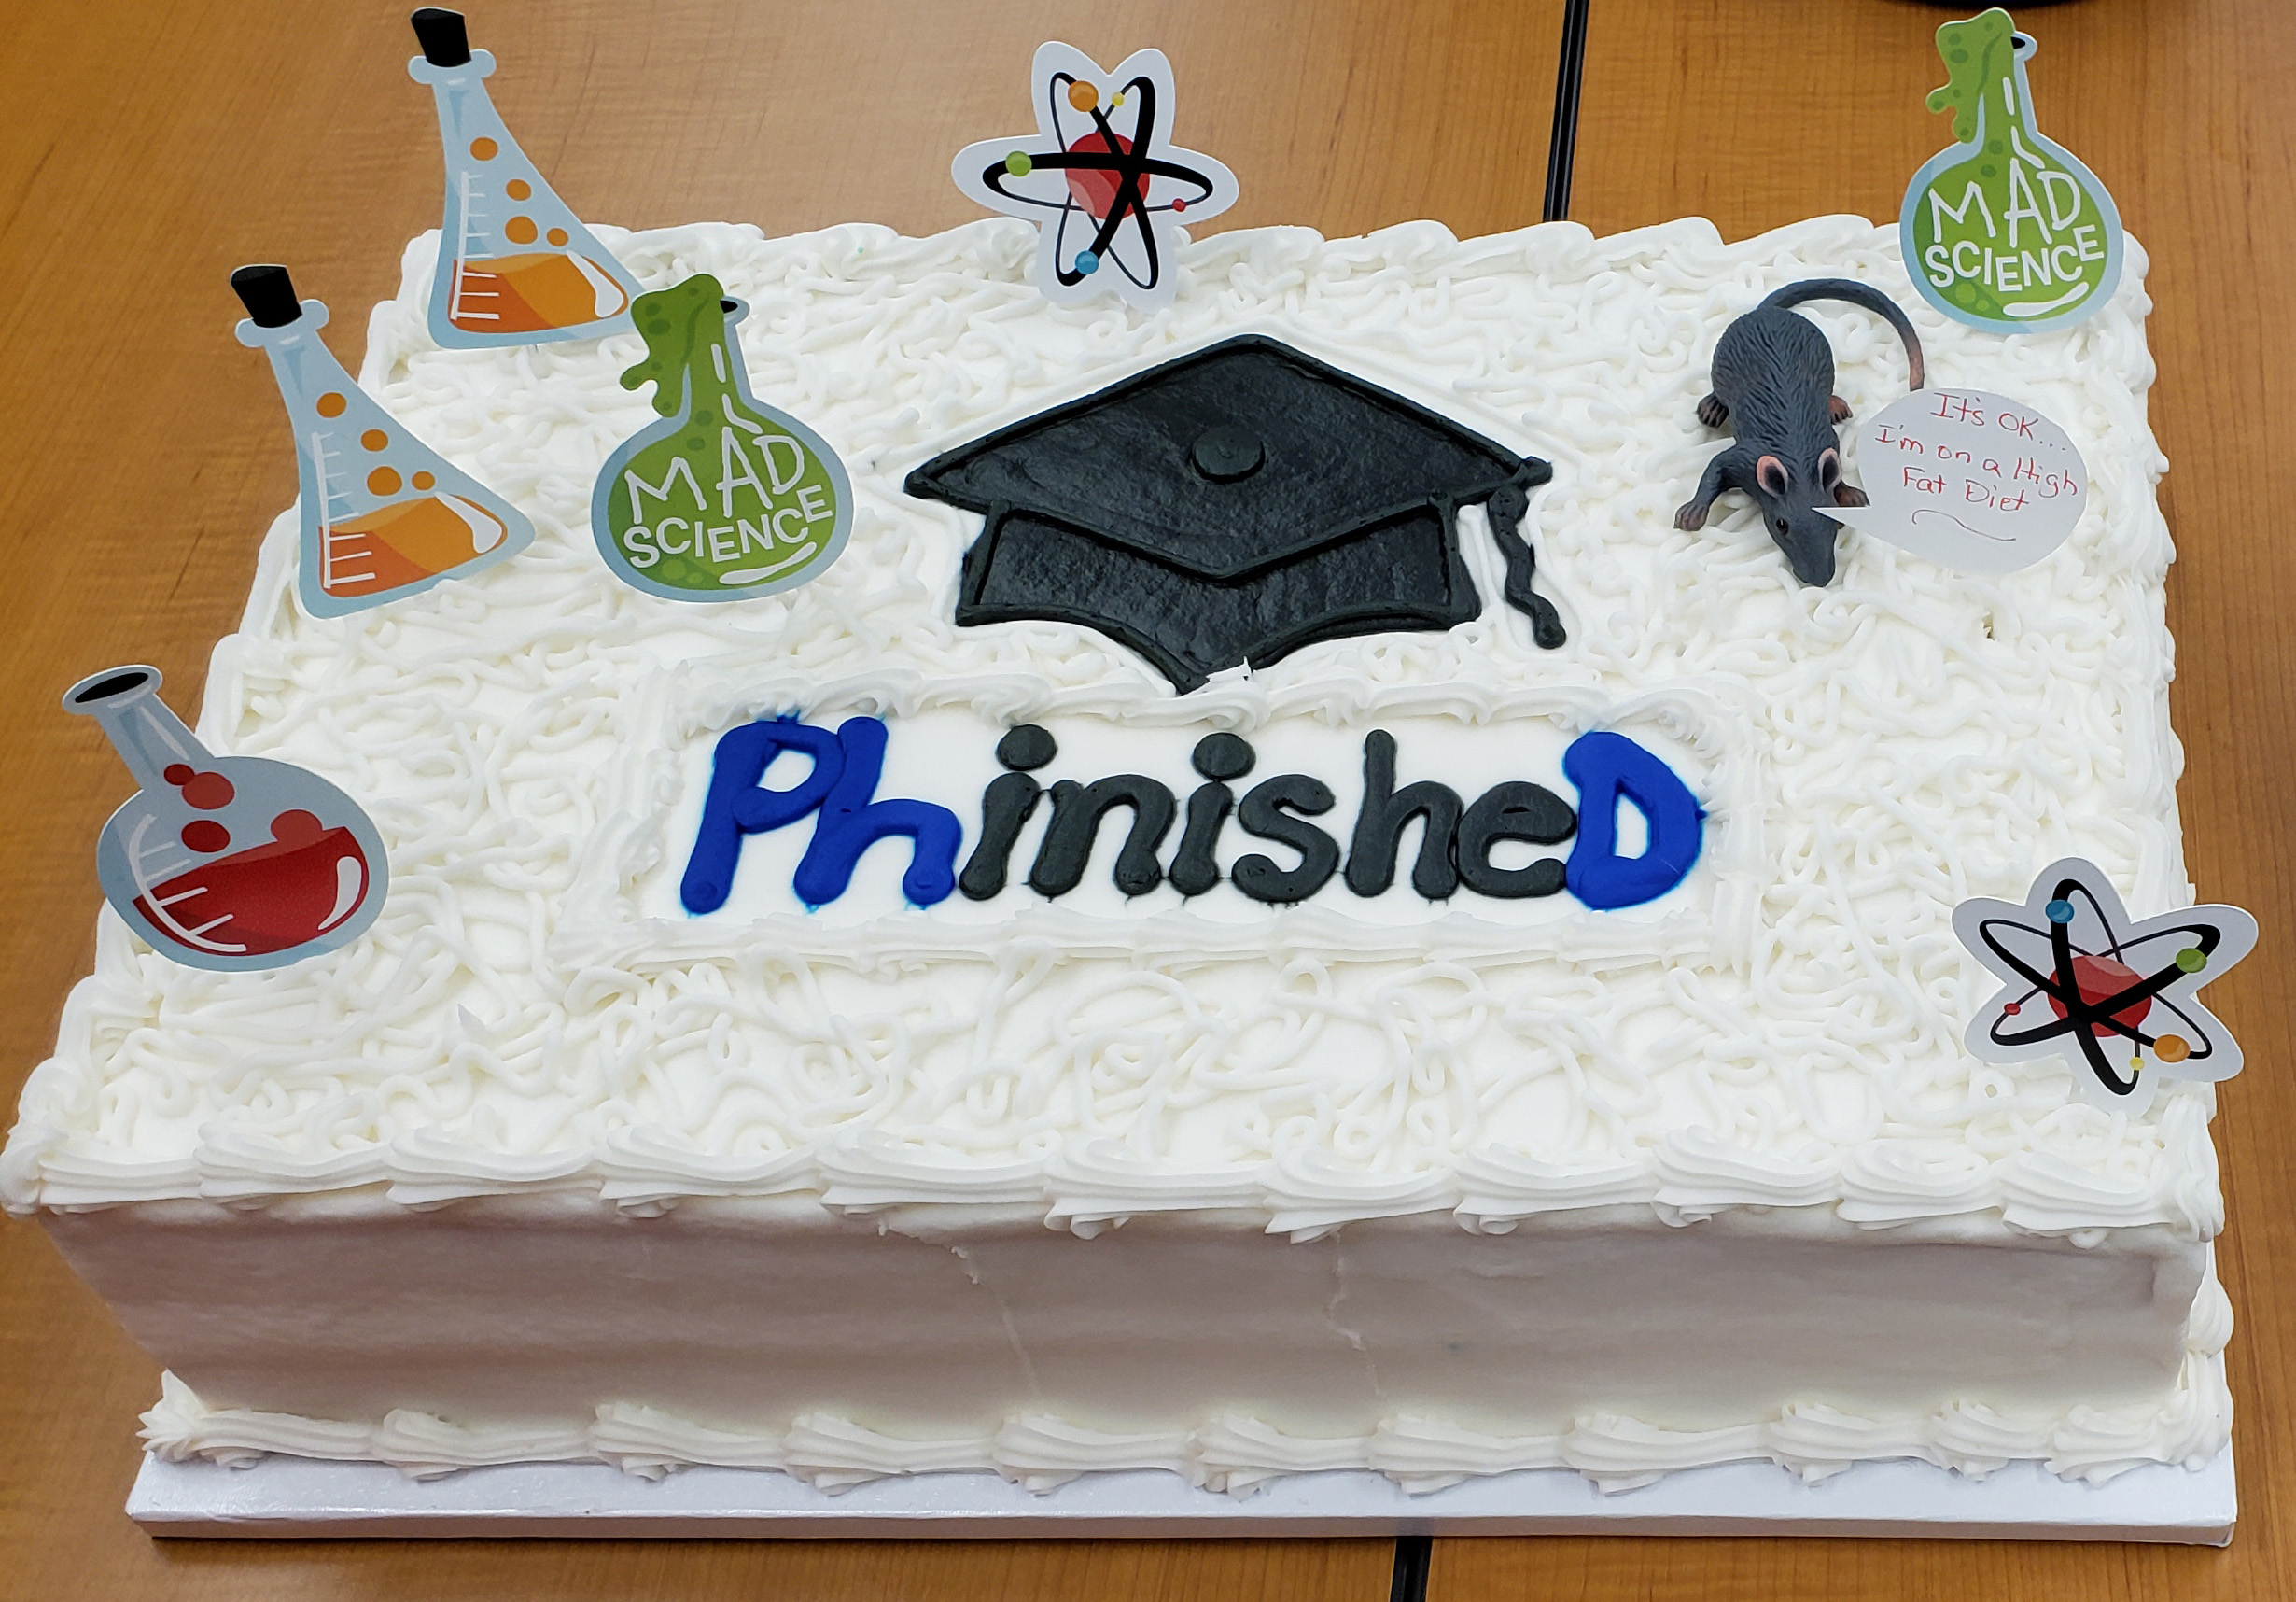 phinished cake